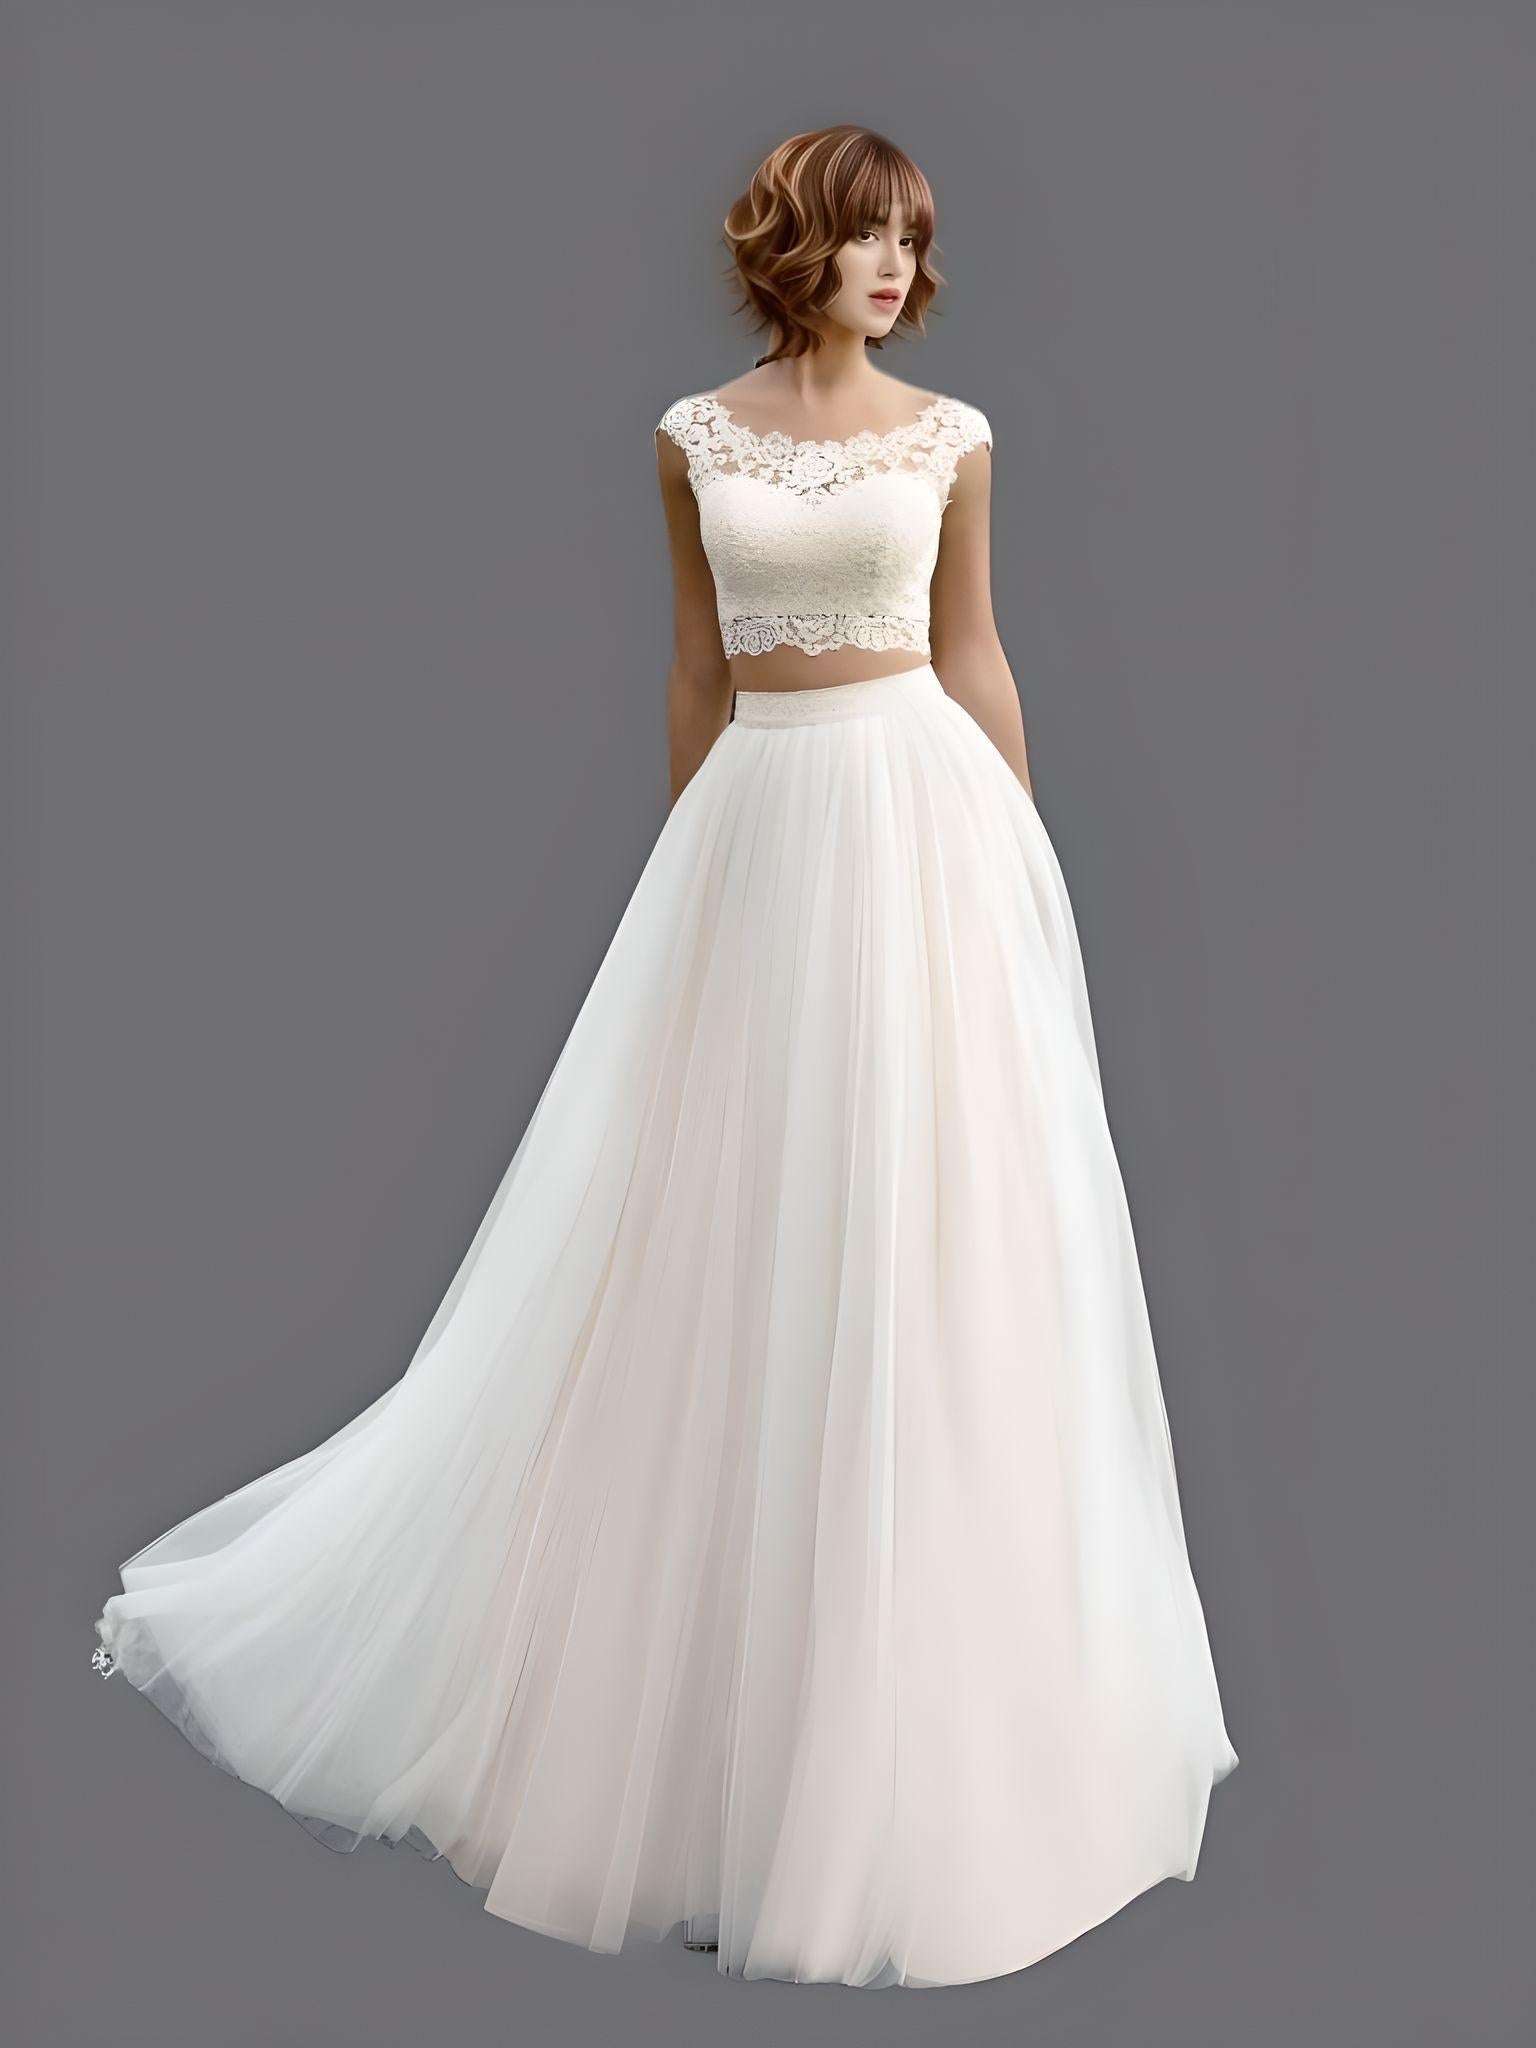 Gorgeous Crop Top Wedding Dress Inspiration | Bridal Musings